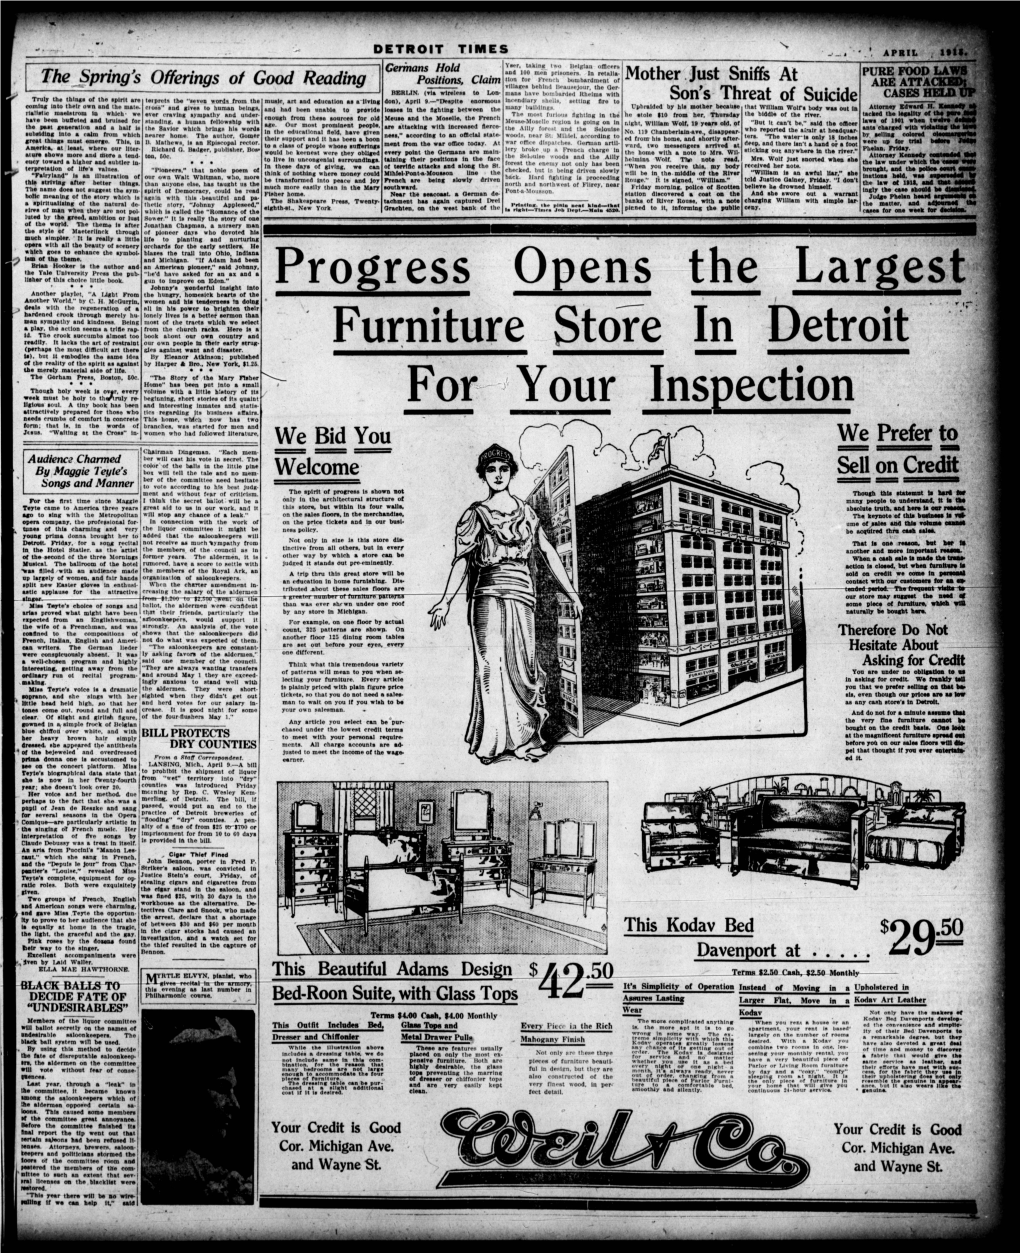 Furniture Store in Detroit